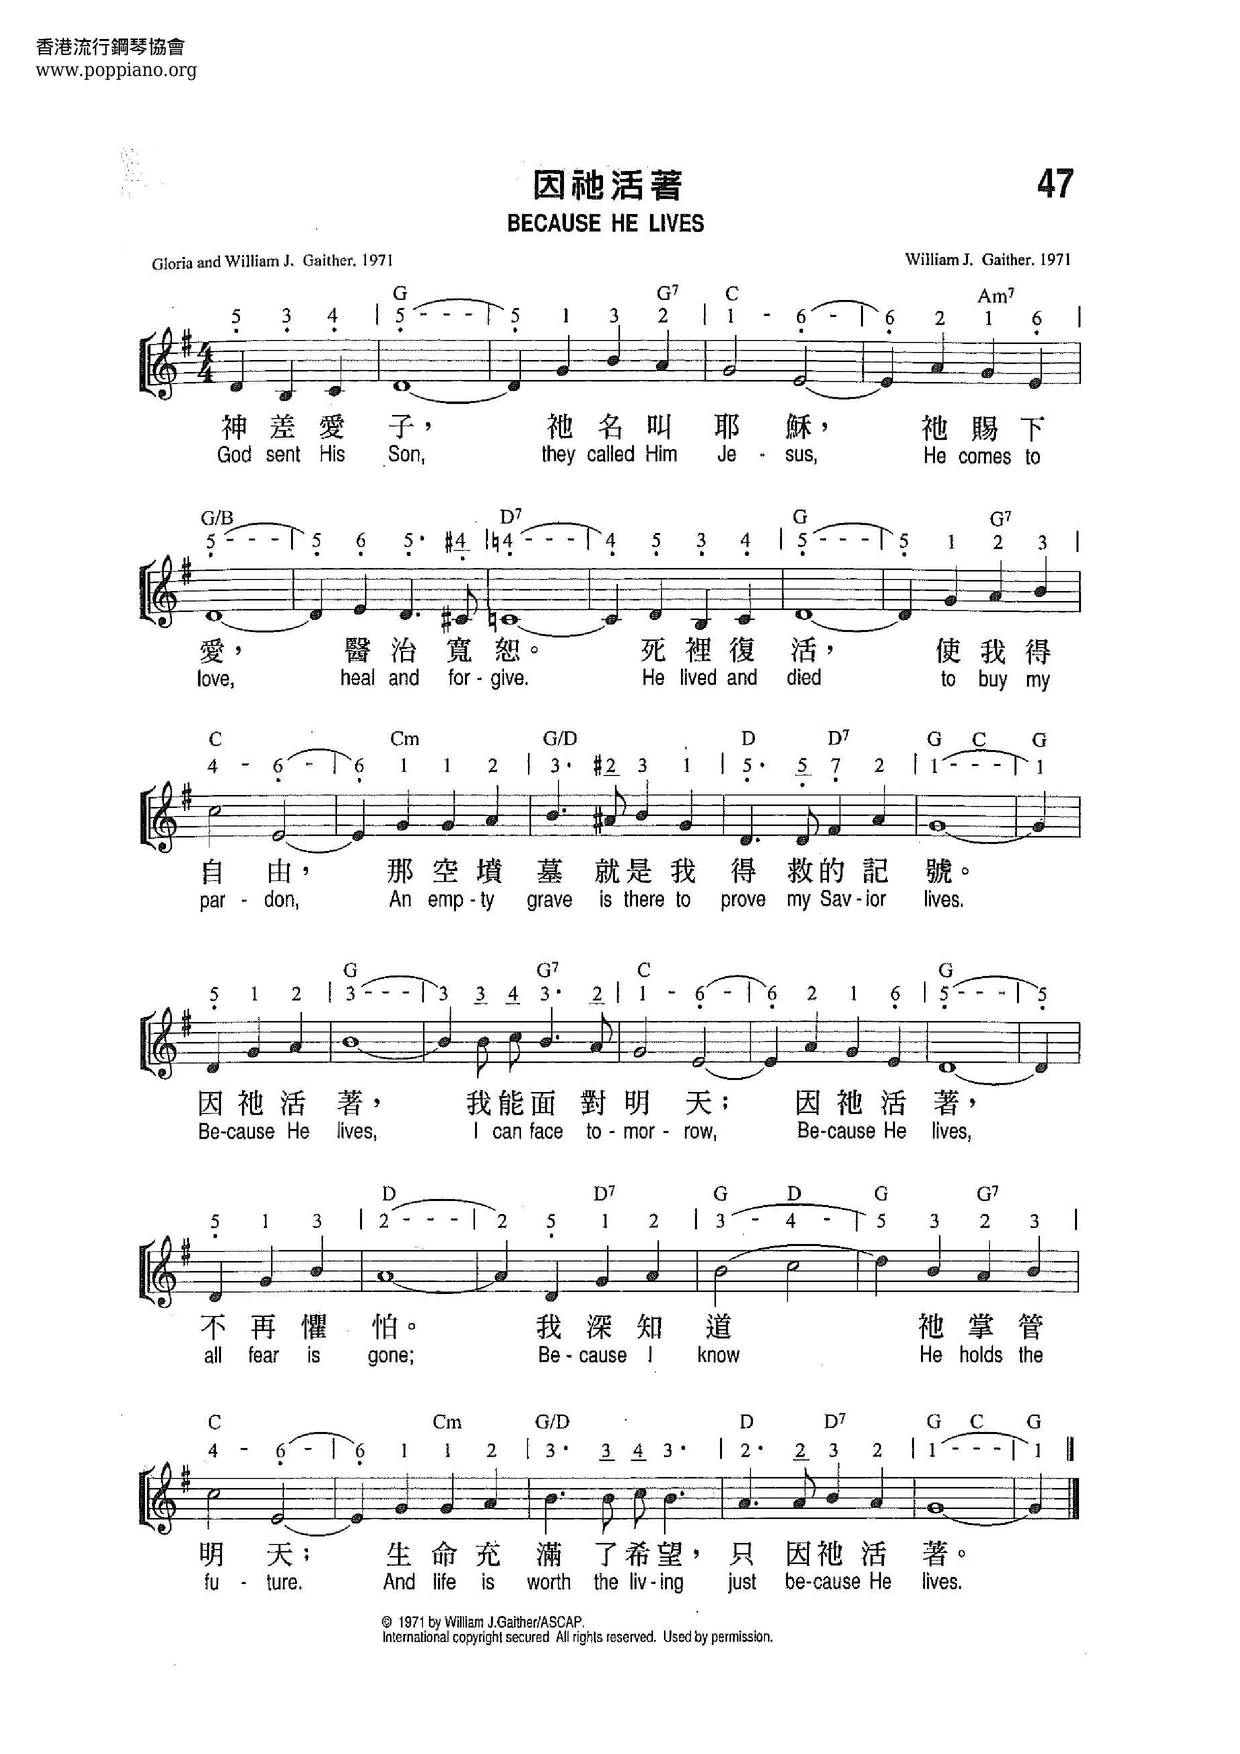 hymn-because-he-lives-sheet-music-pdf-free-score-download